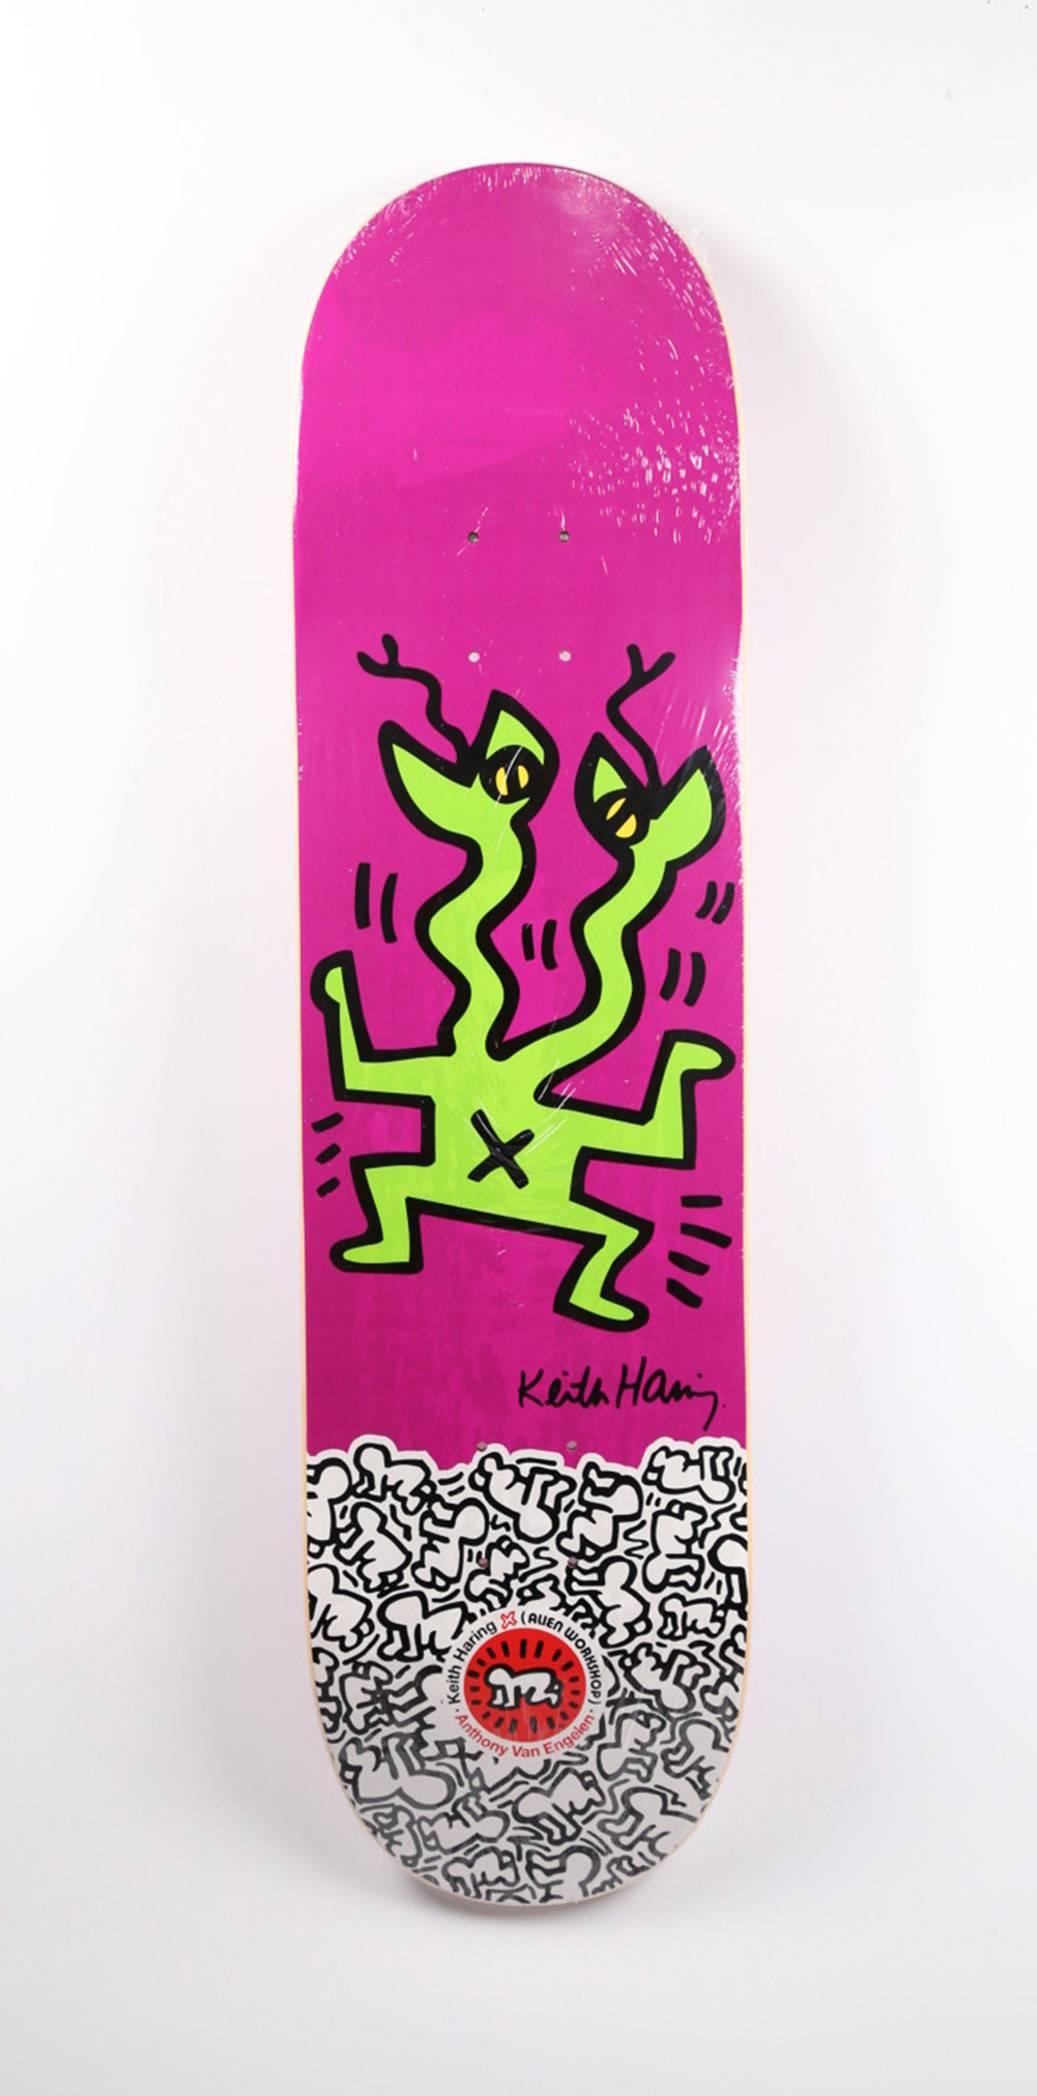 Keith Haring set of 10 skateboard decks (Keith Haring alien workshop) - Pop Art Print by (after) Keith Haring